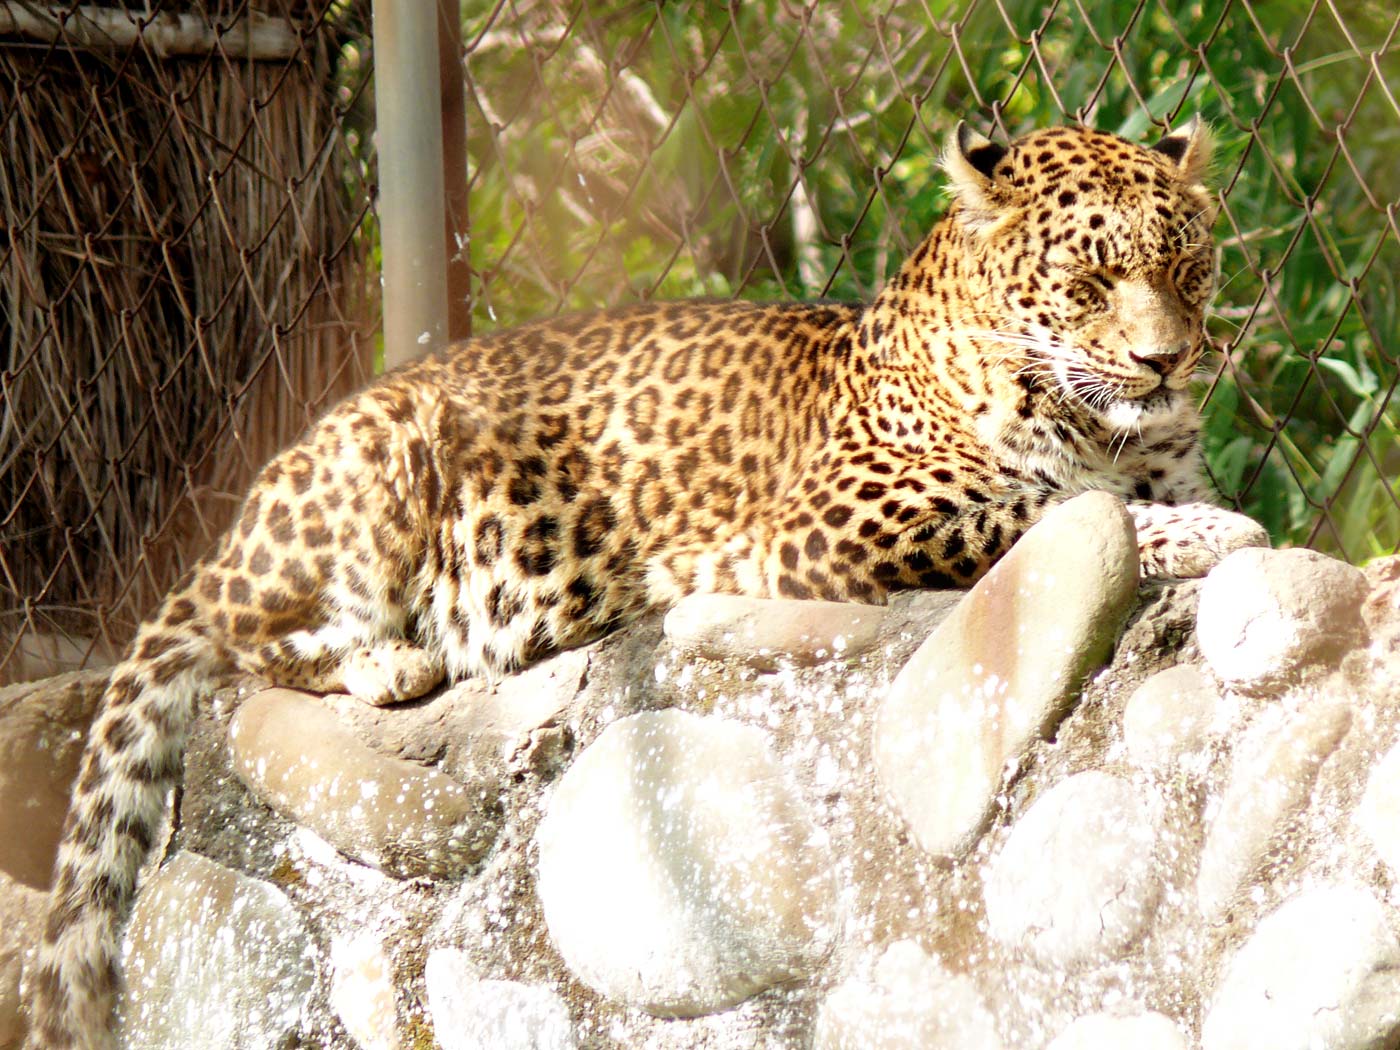 Leopard, copyright Picturejockey : Navin Harish 2005-2013